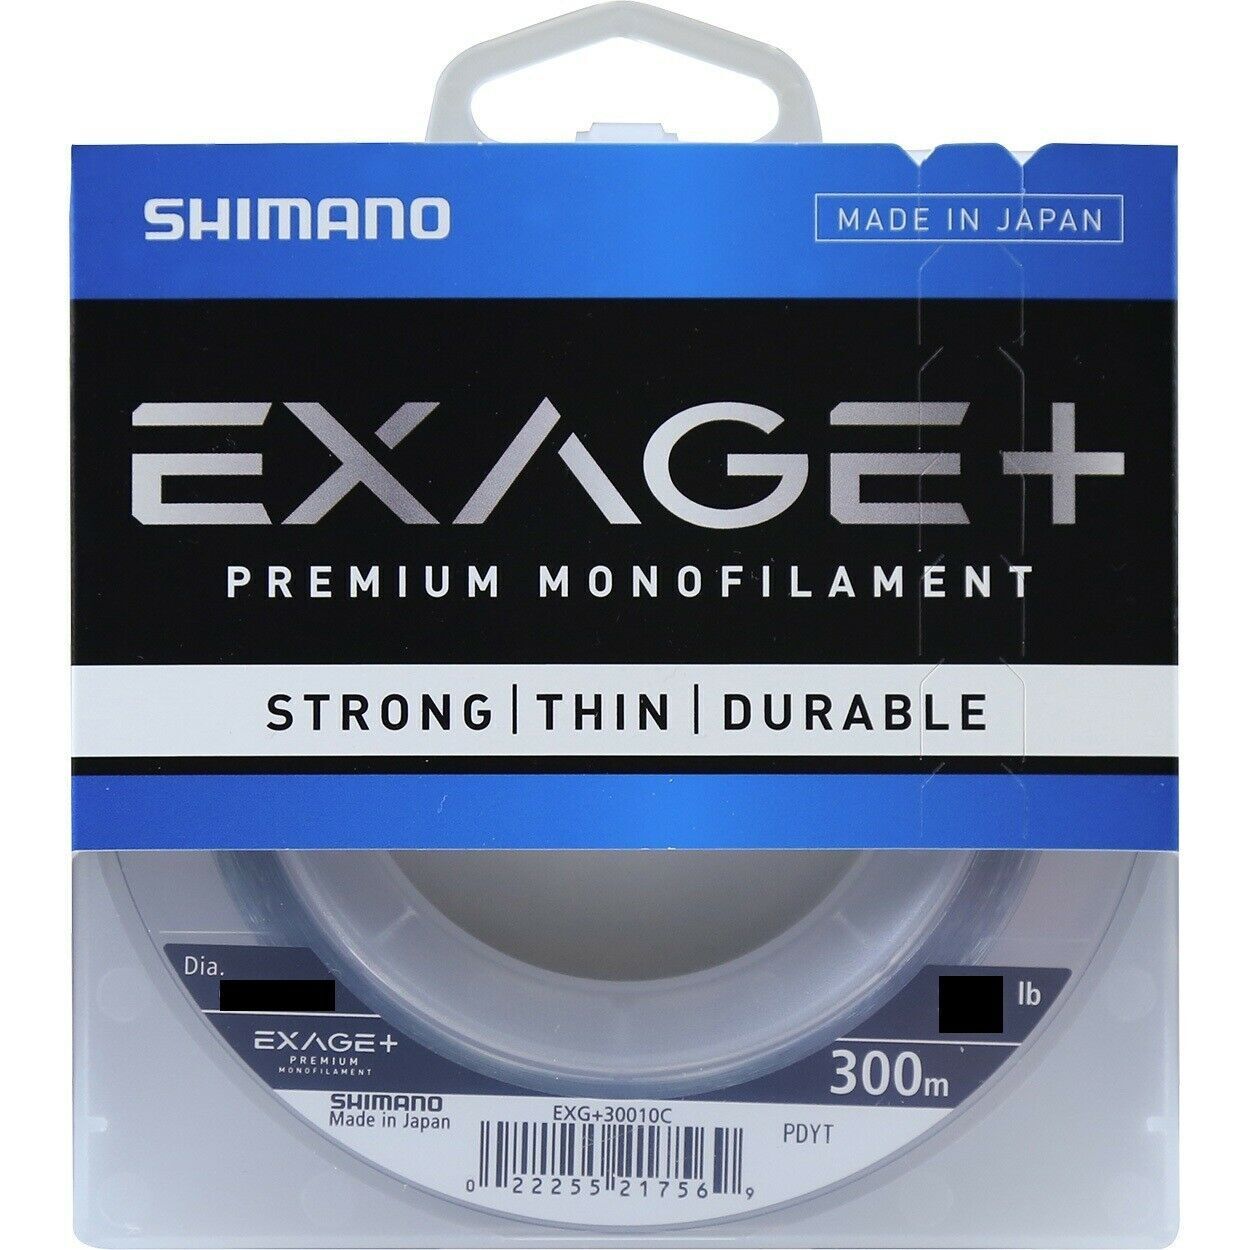 Shimano 300m Exage+ Premium Monofilament Fishing Line #40lb